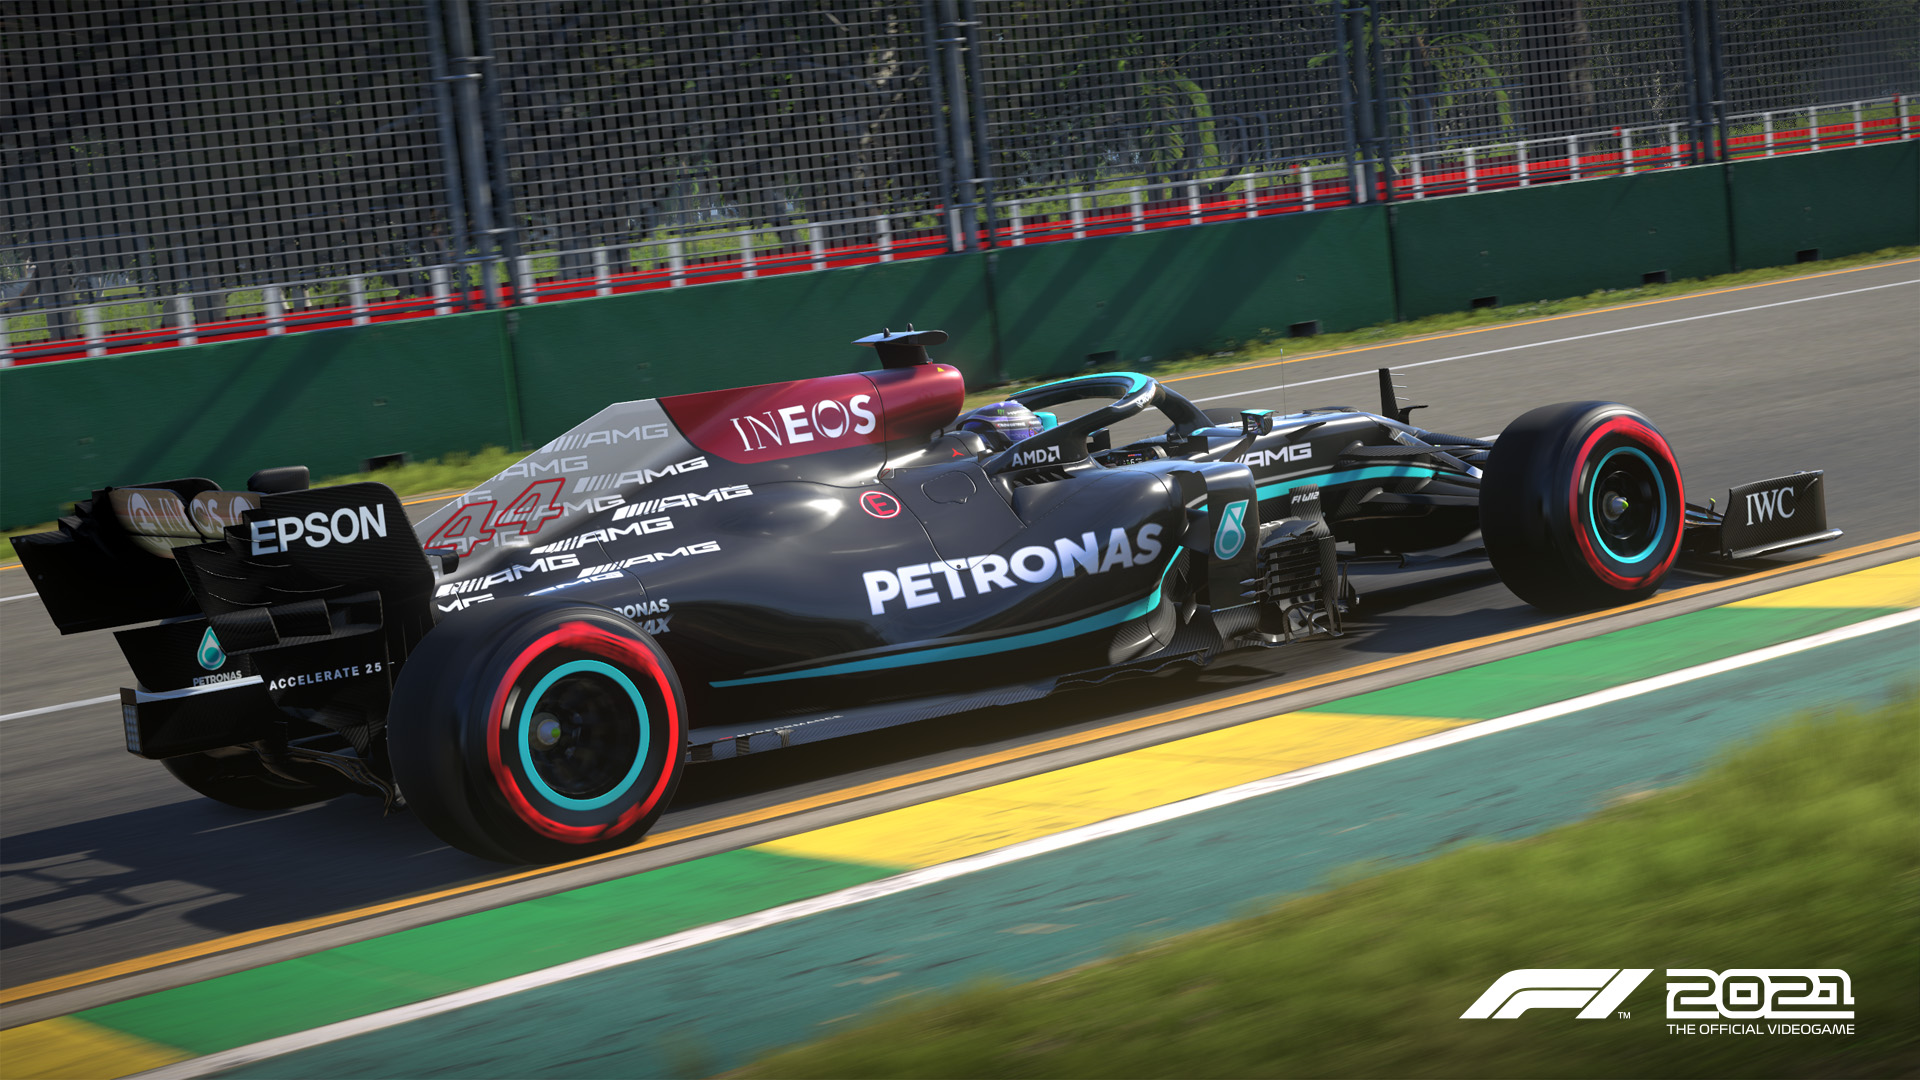 F1 world champion Lewis Hamilton’s Mercedes at Australia in F1 2021